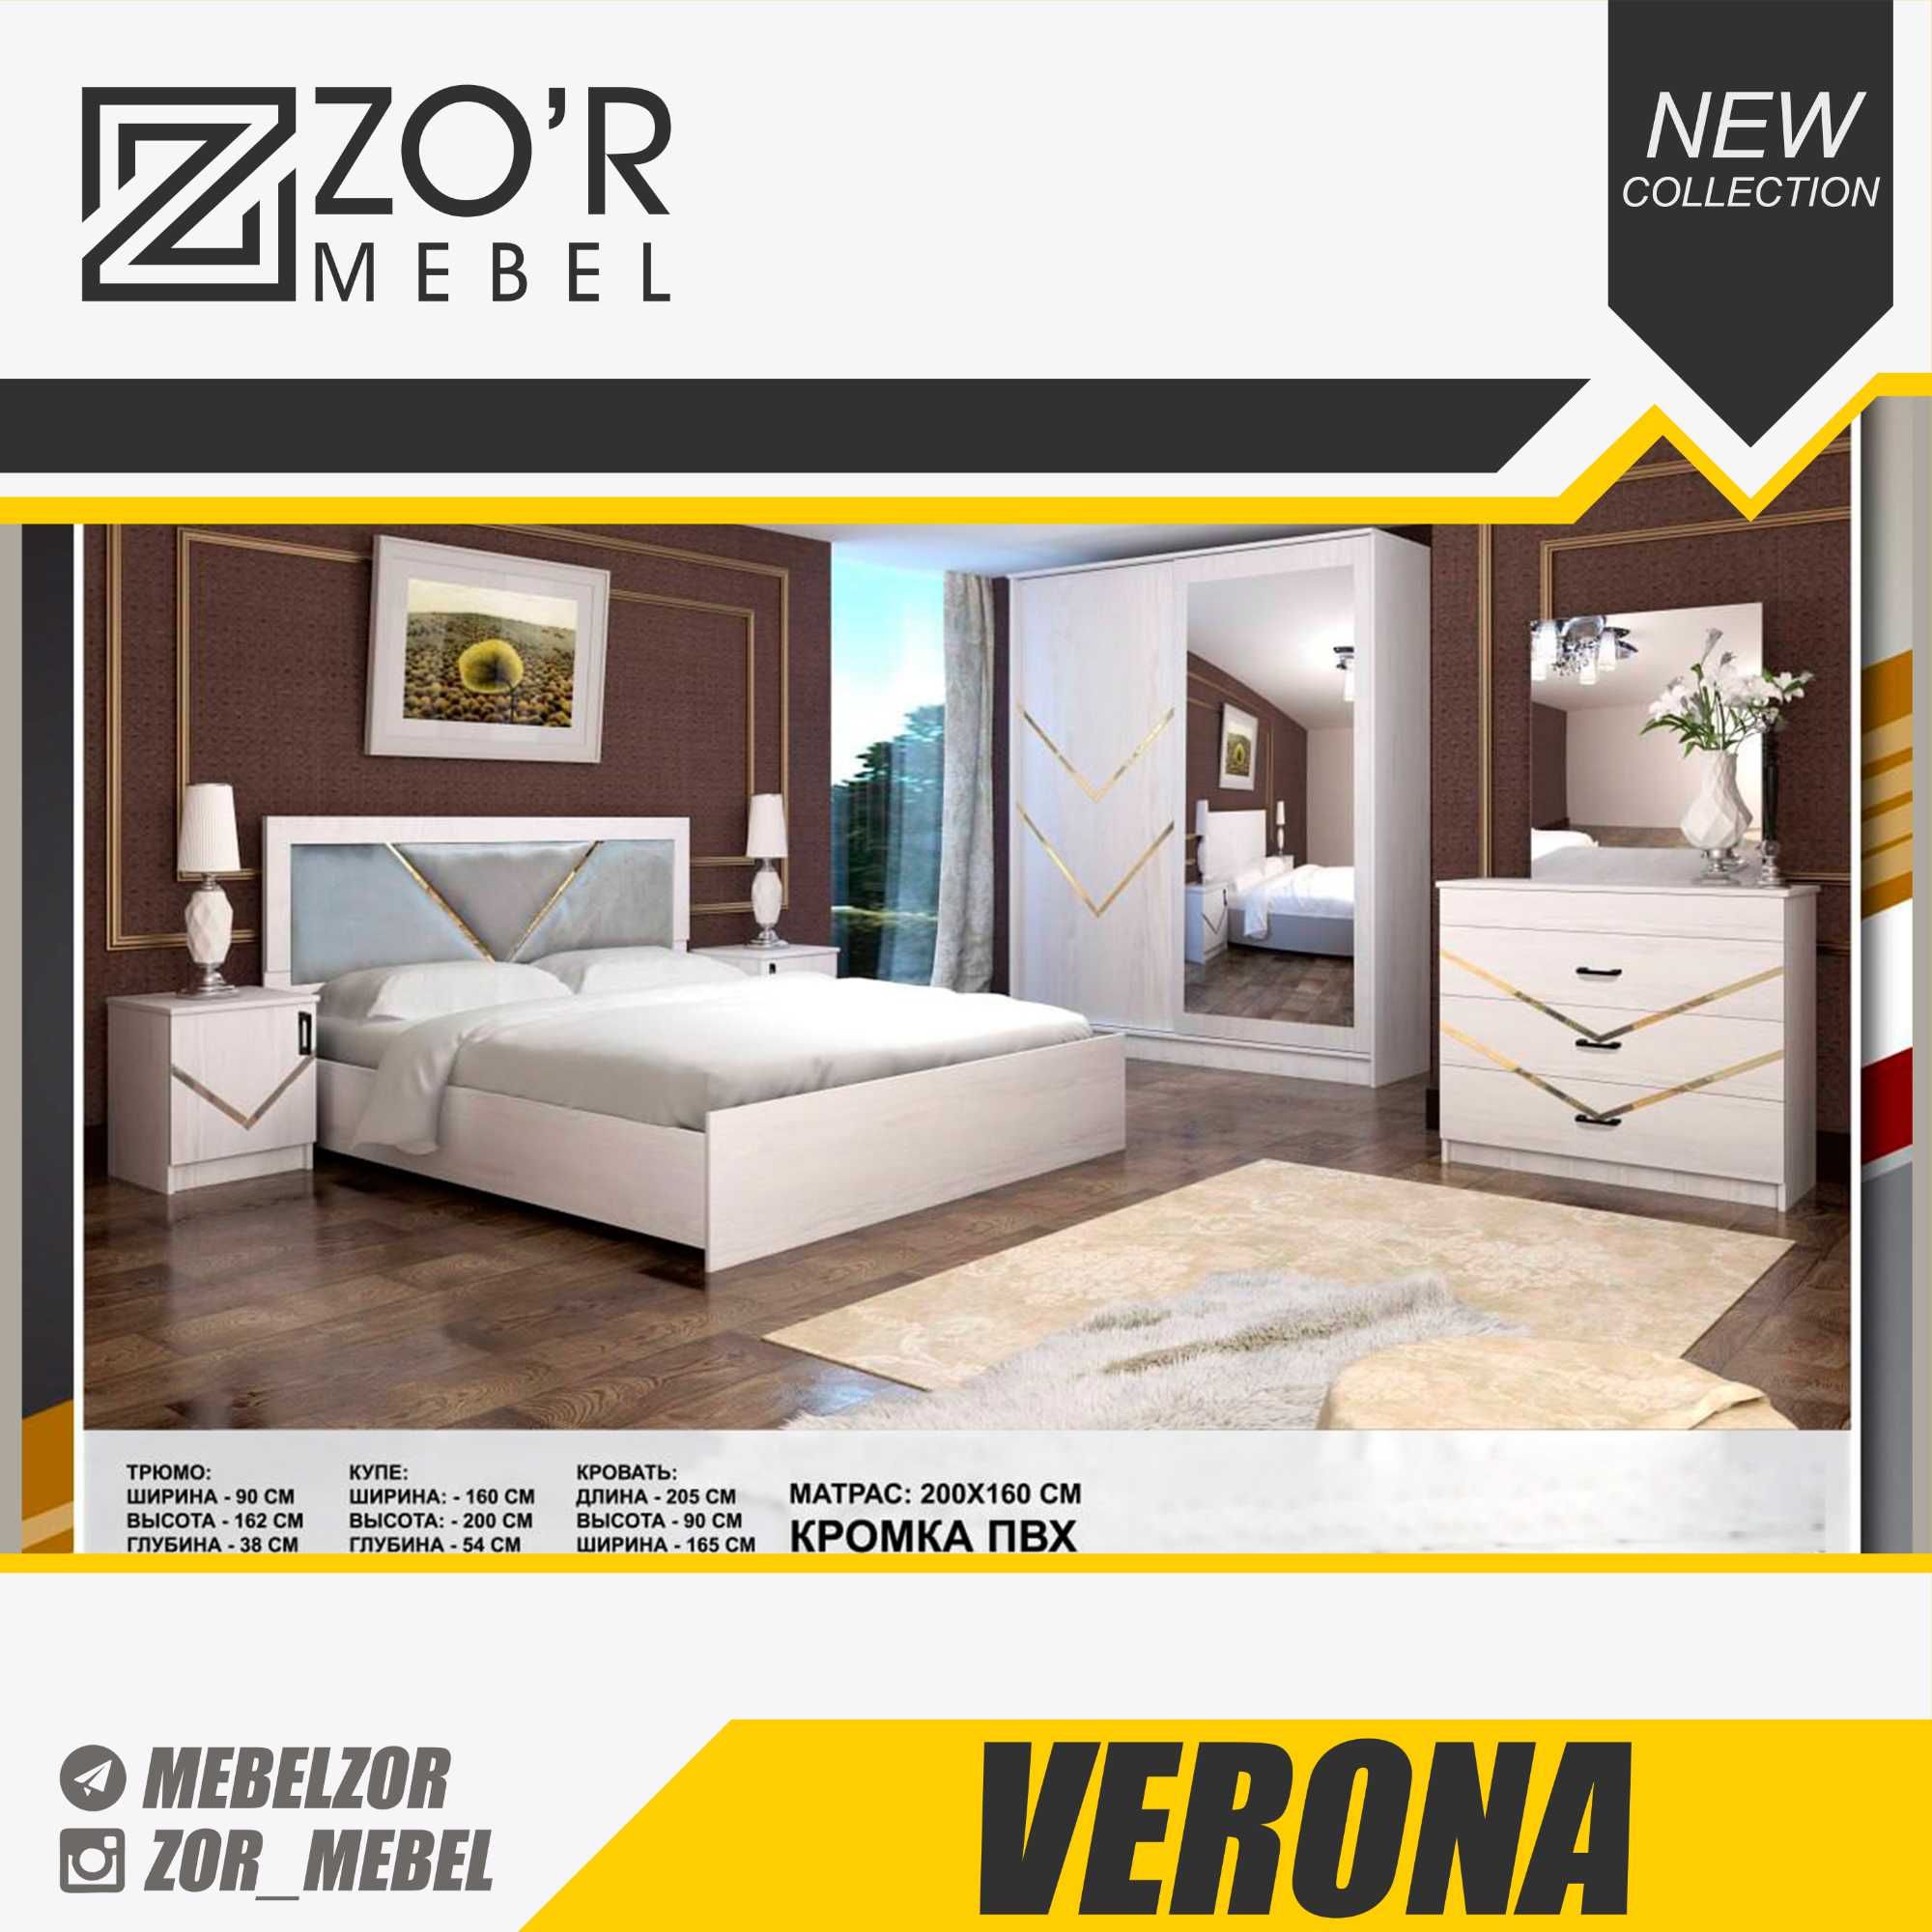 Ётоқхона мебеллар тўплами / Мебели для спальни "Verona"